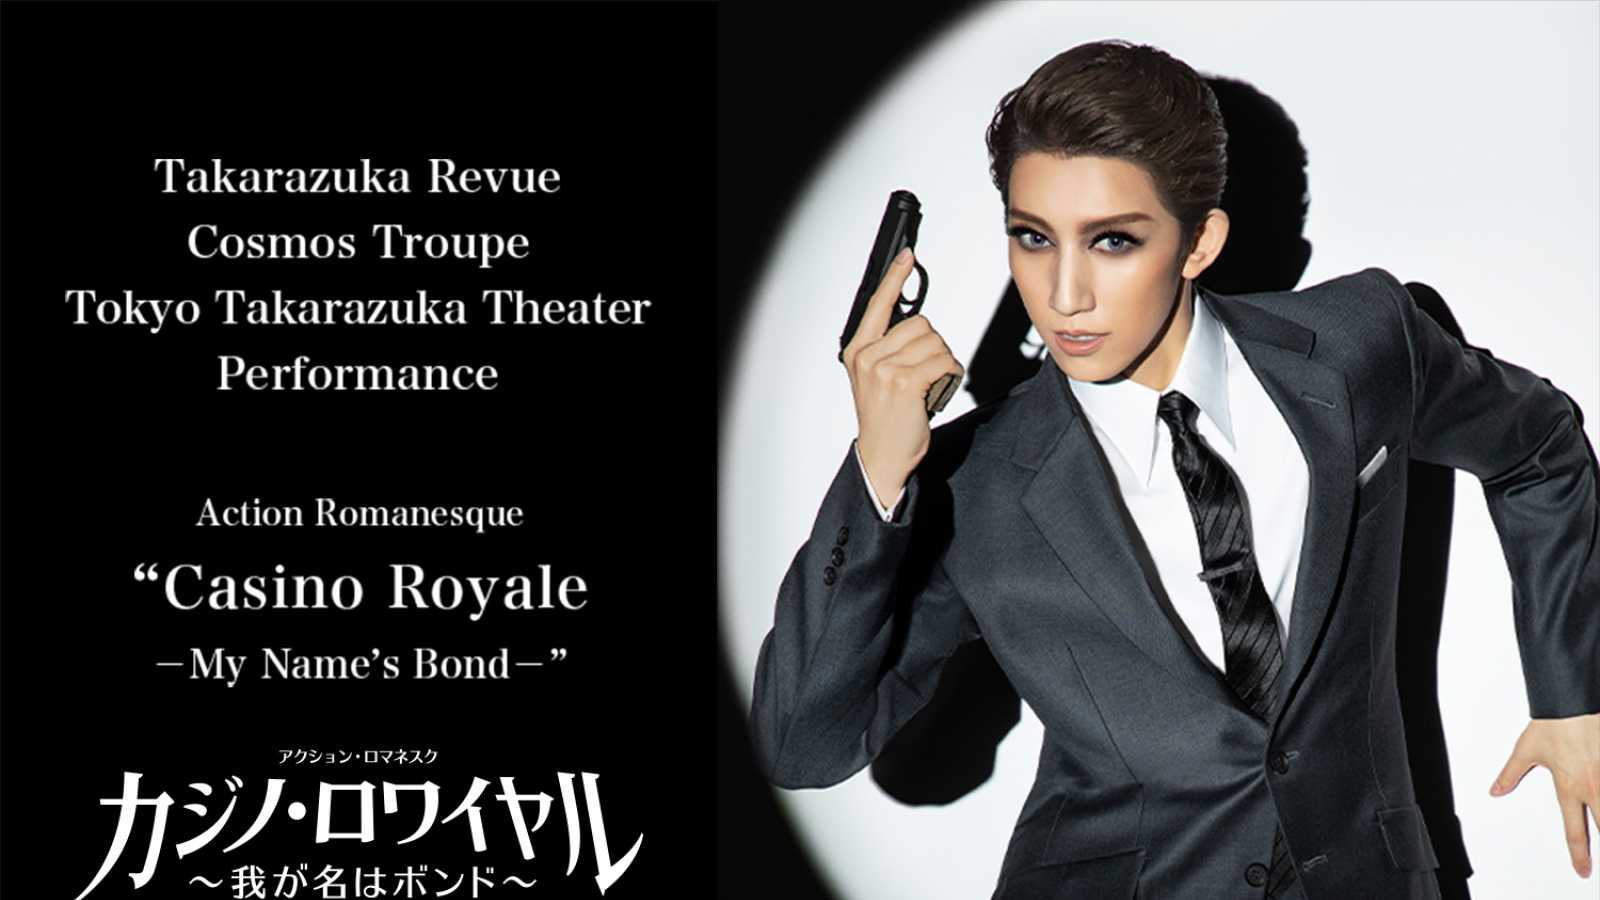 Takarazuka Revue Company's Cosmos Troupe to Stream Final Performance of 